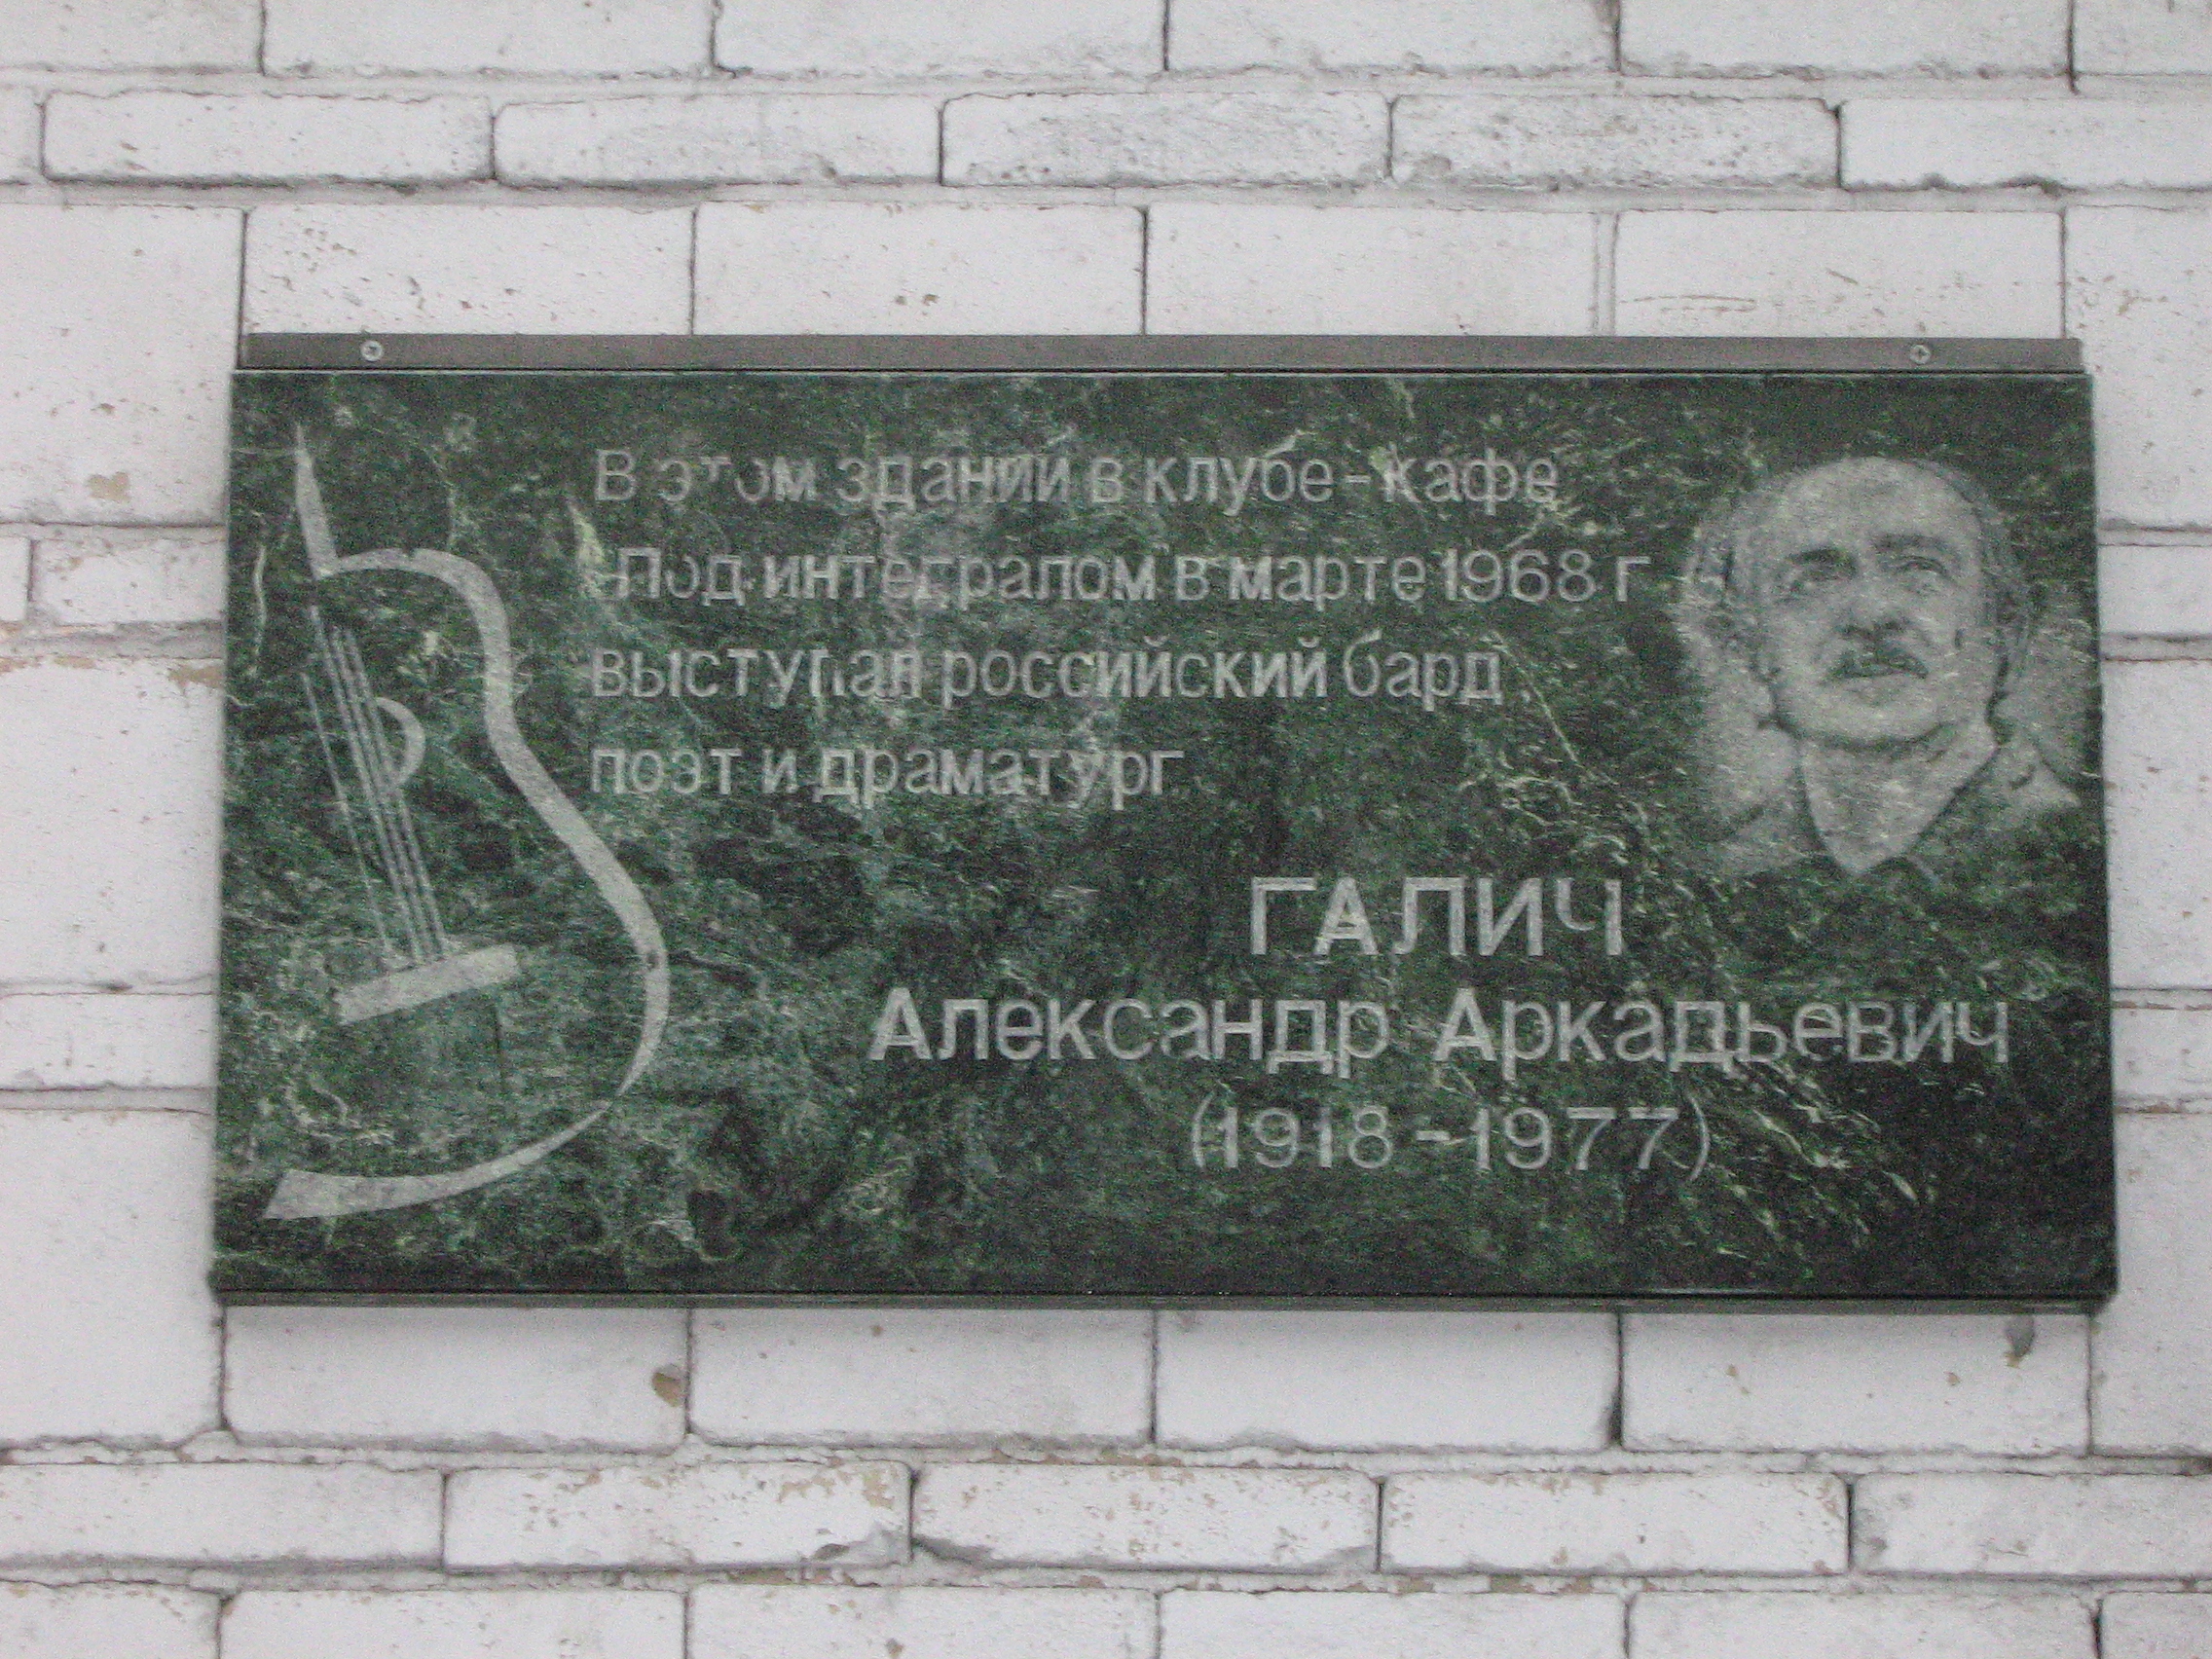 Memorial plaque dedicated to A. Galich